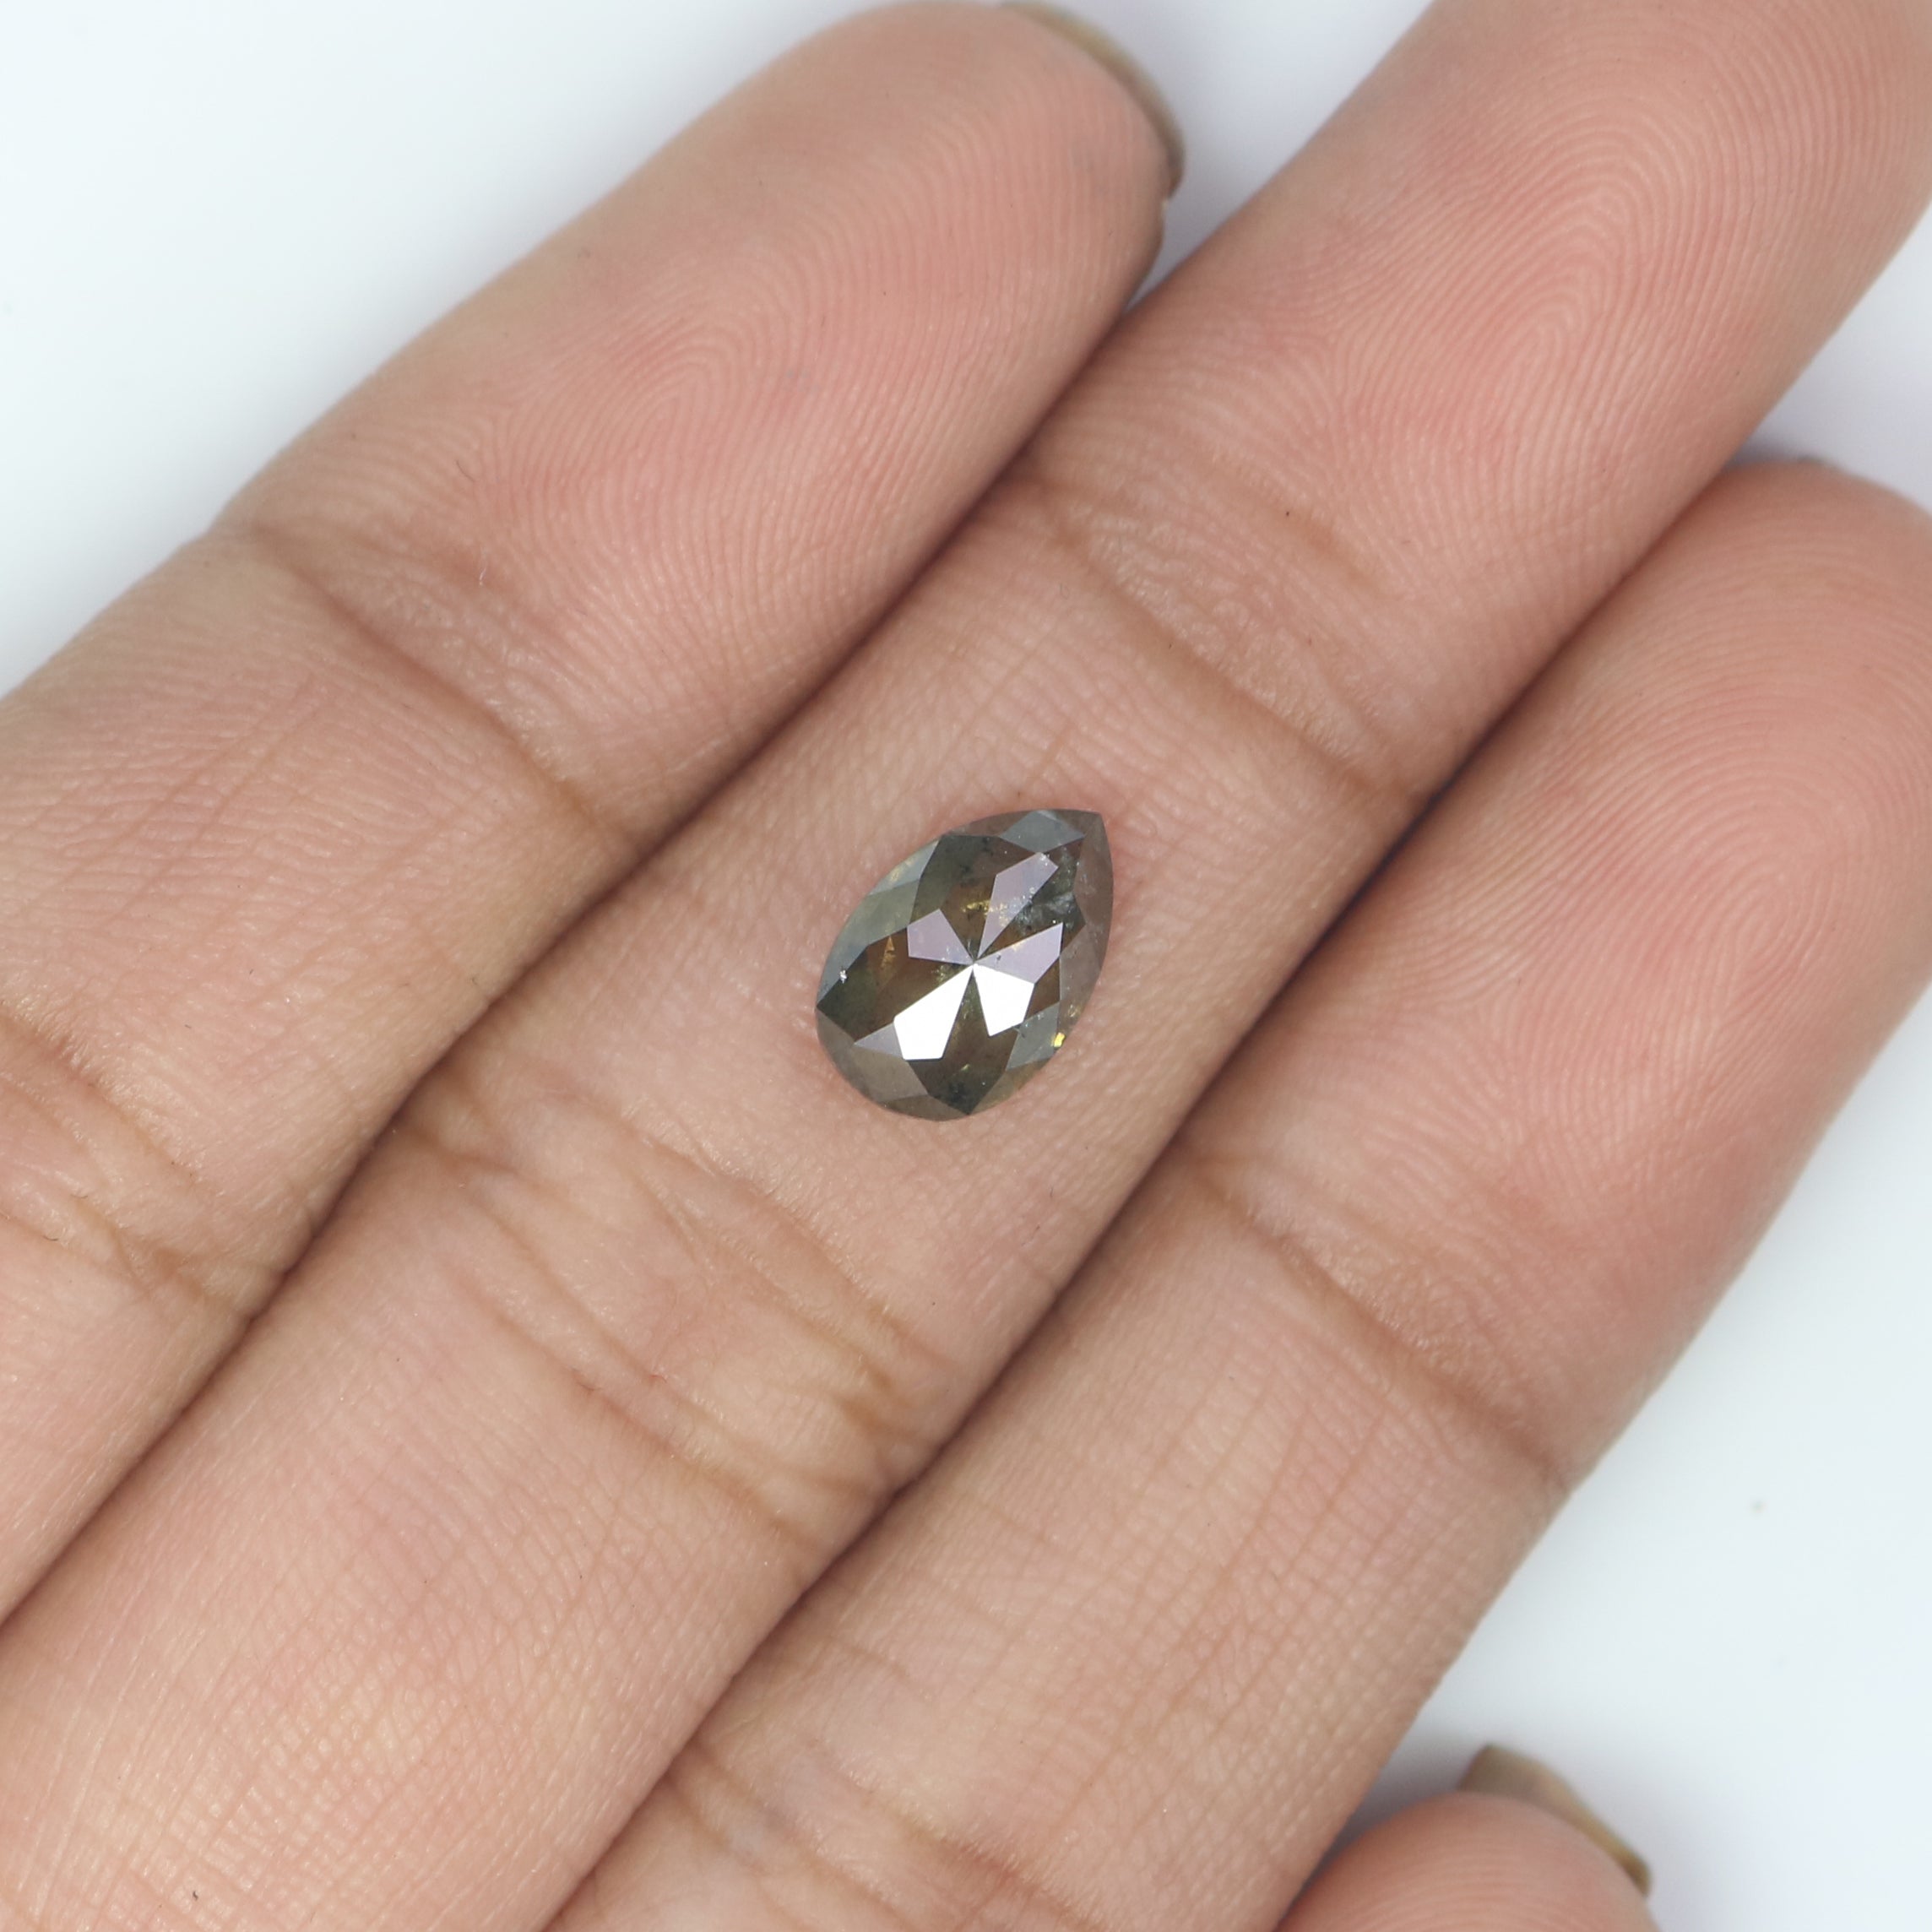 1.16 CT Natural Loose Pear Diamond Green Color Pear Diamond 8.70 MM Natural Loose Diamond Pear Rose Cut Diamond Pear Shape Diamond QK2608